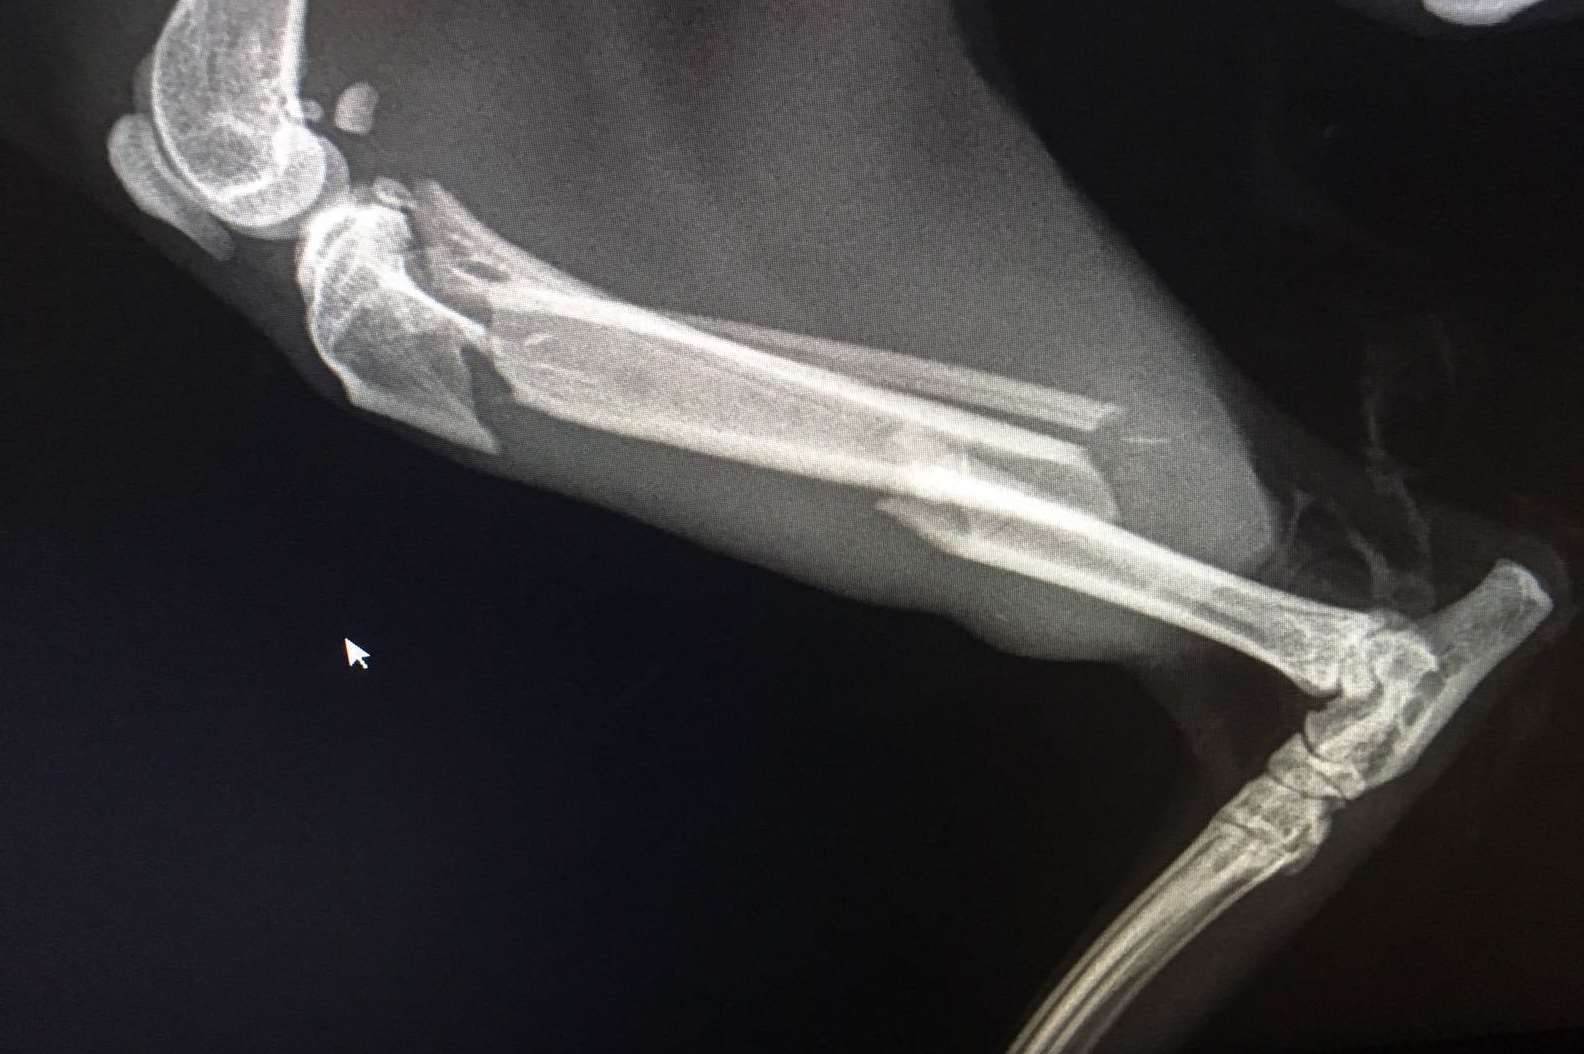 An X-ray of Nigel's leg